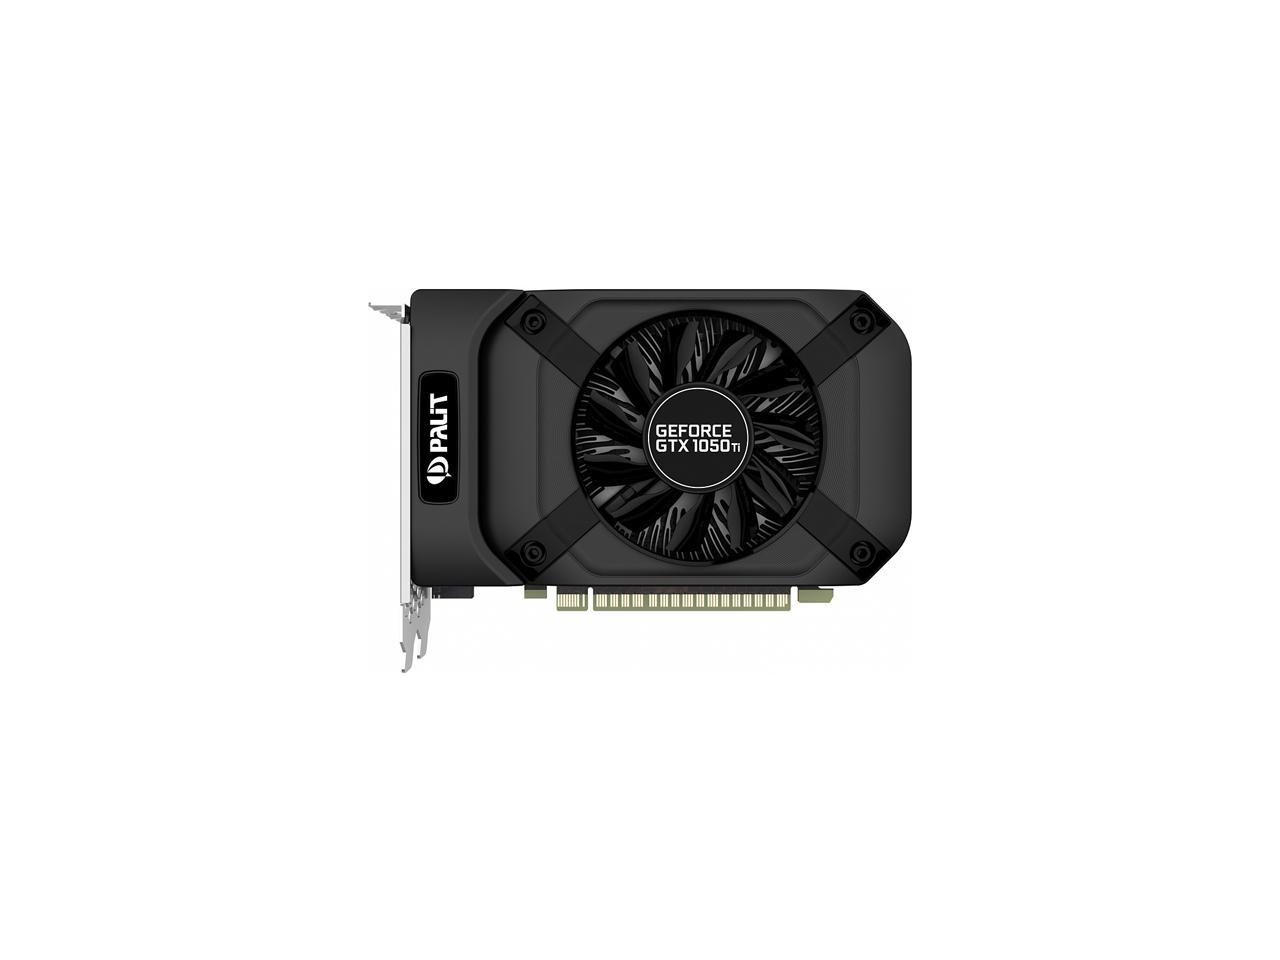 Palit GeForce GTX 1050 Ti StormX GeForce GTX 1050 Ti Video Card 